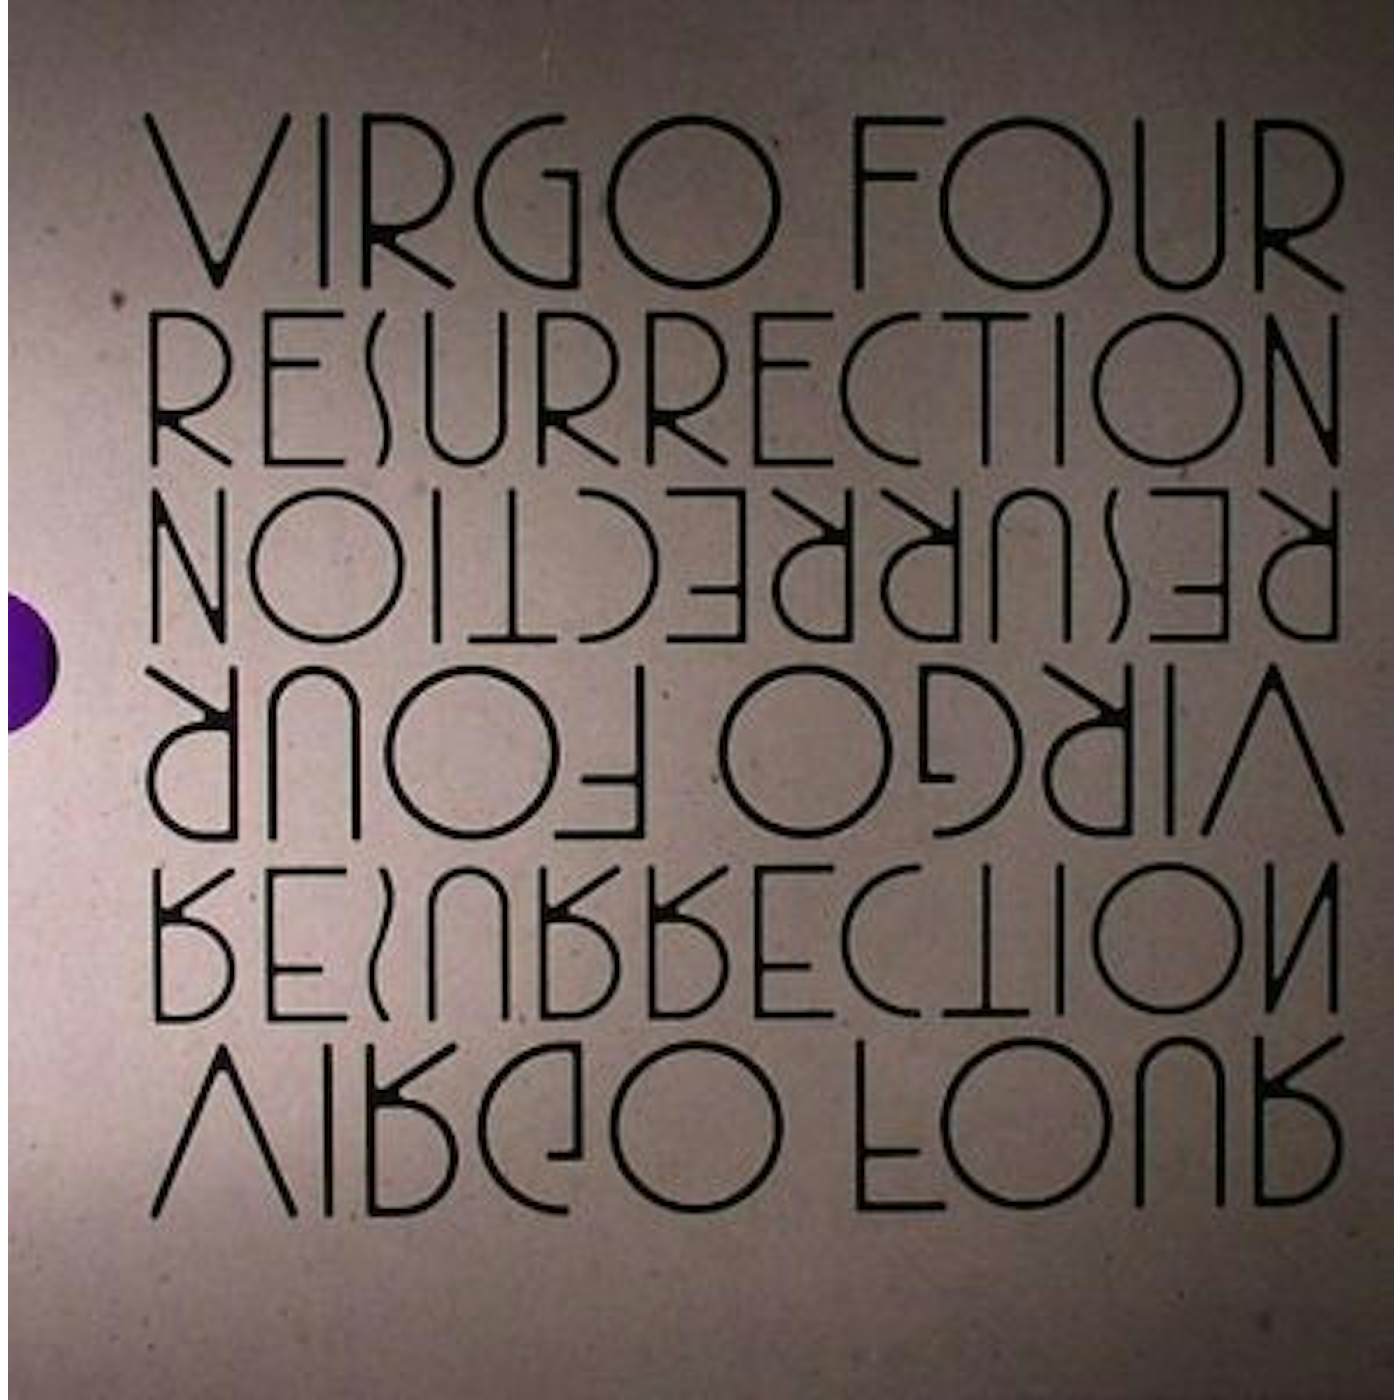 Virgo Four Resurrection Vinyl Record